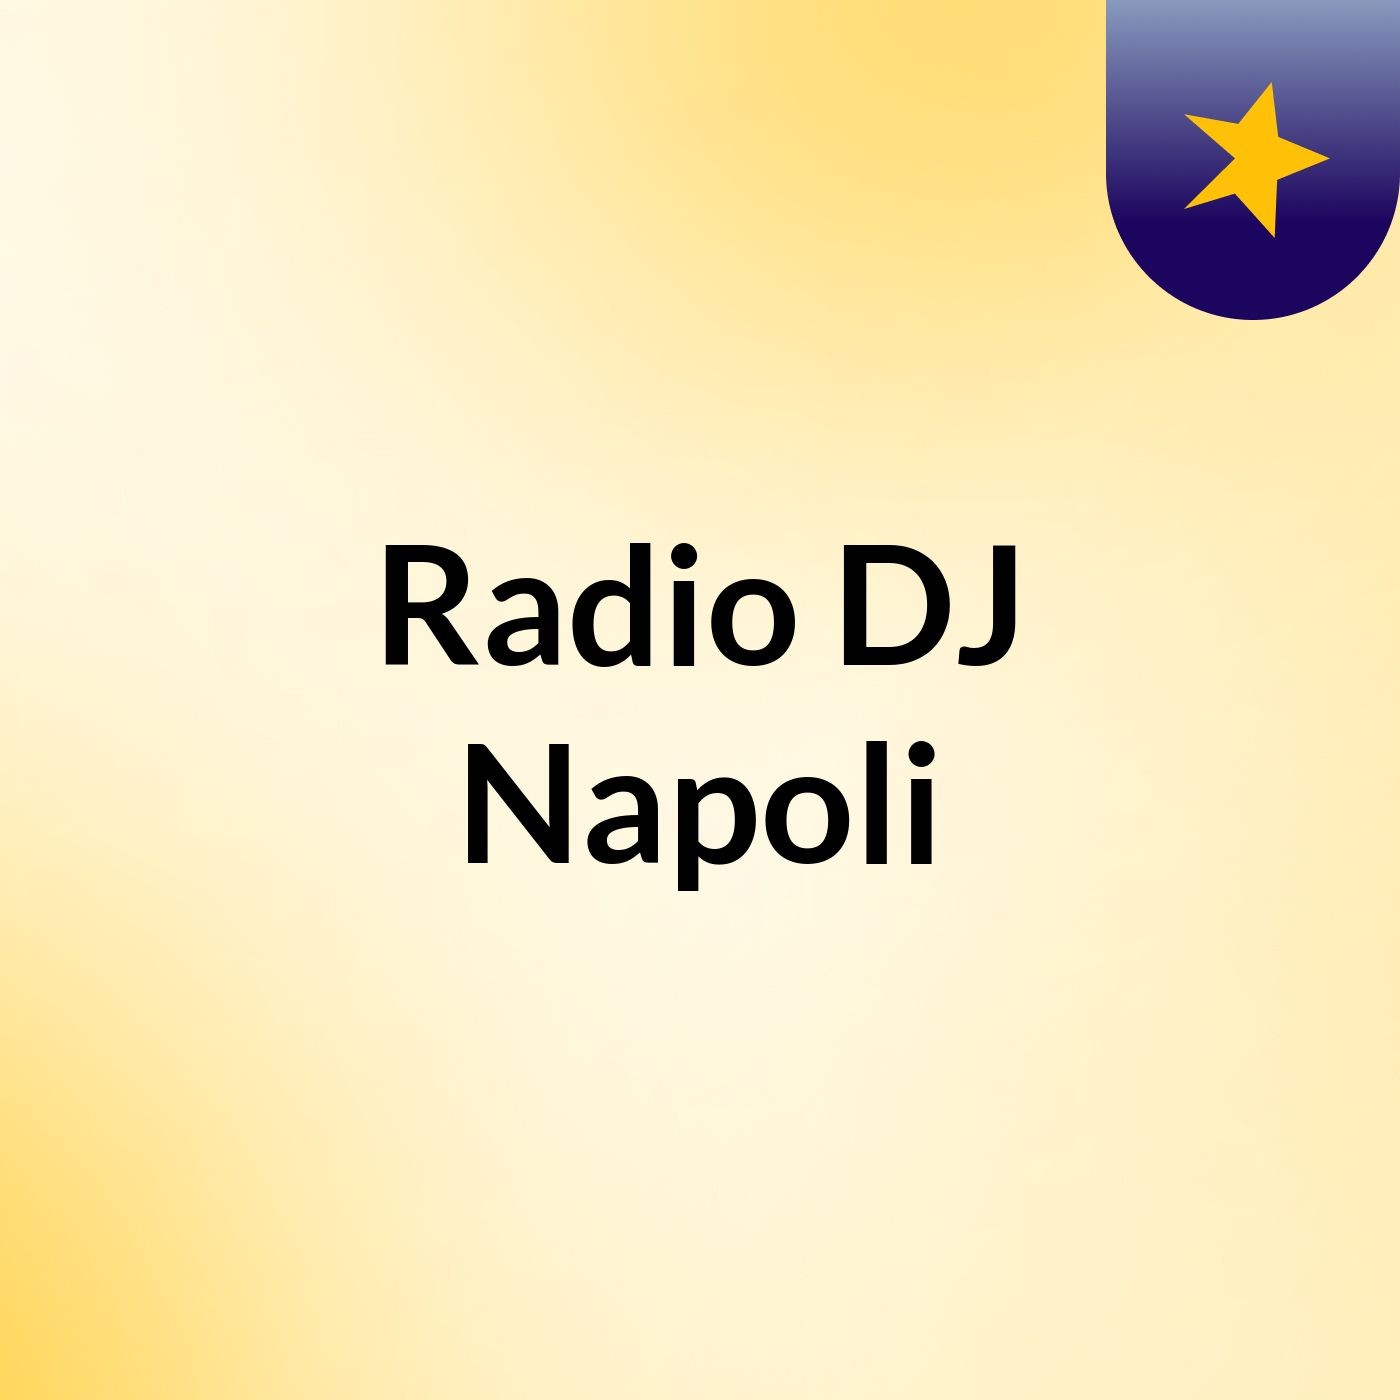 Radio DJ Napoli